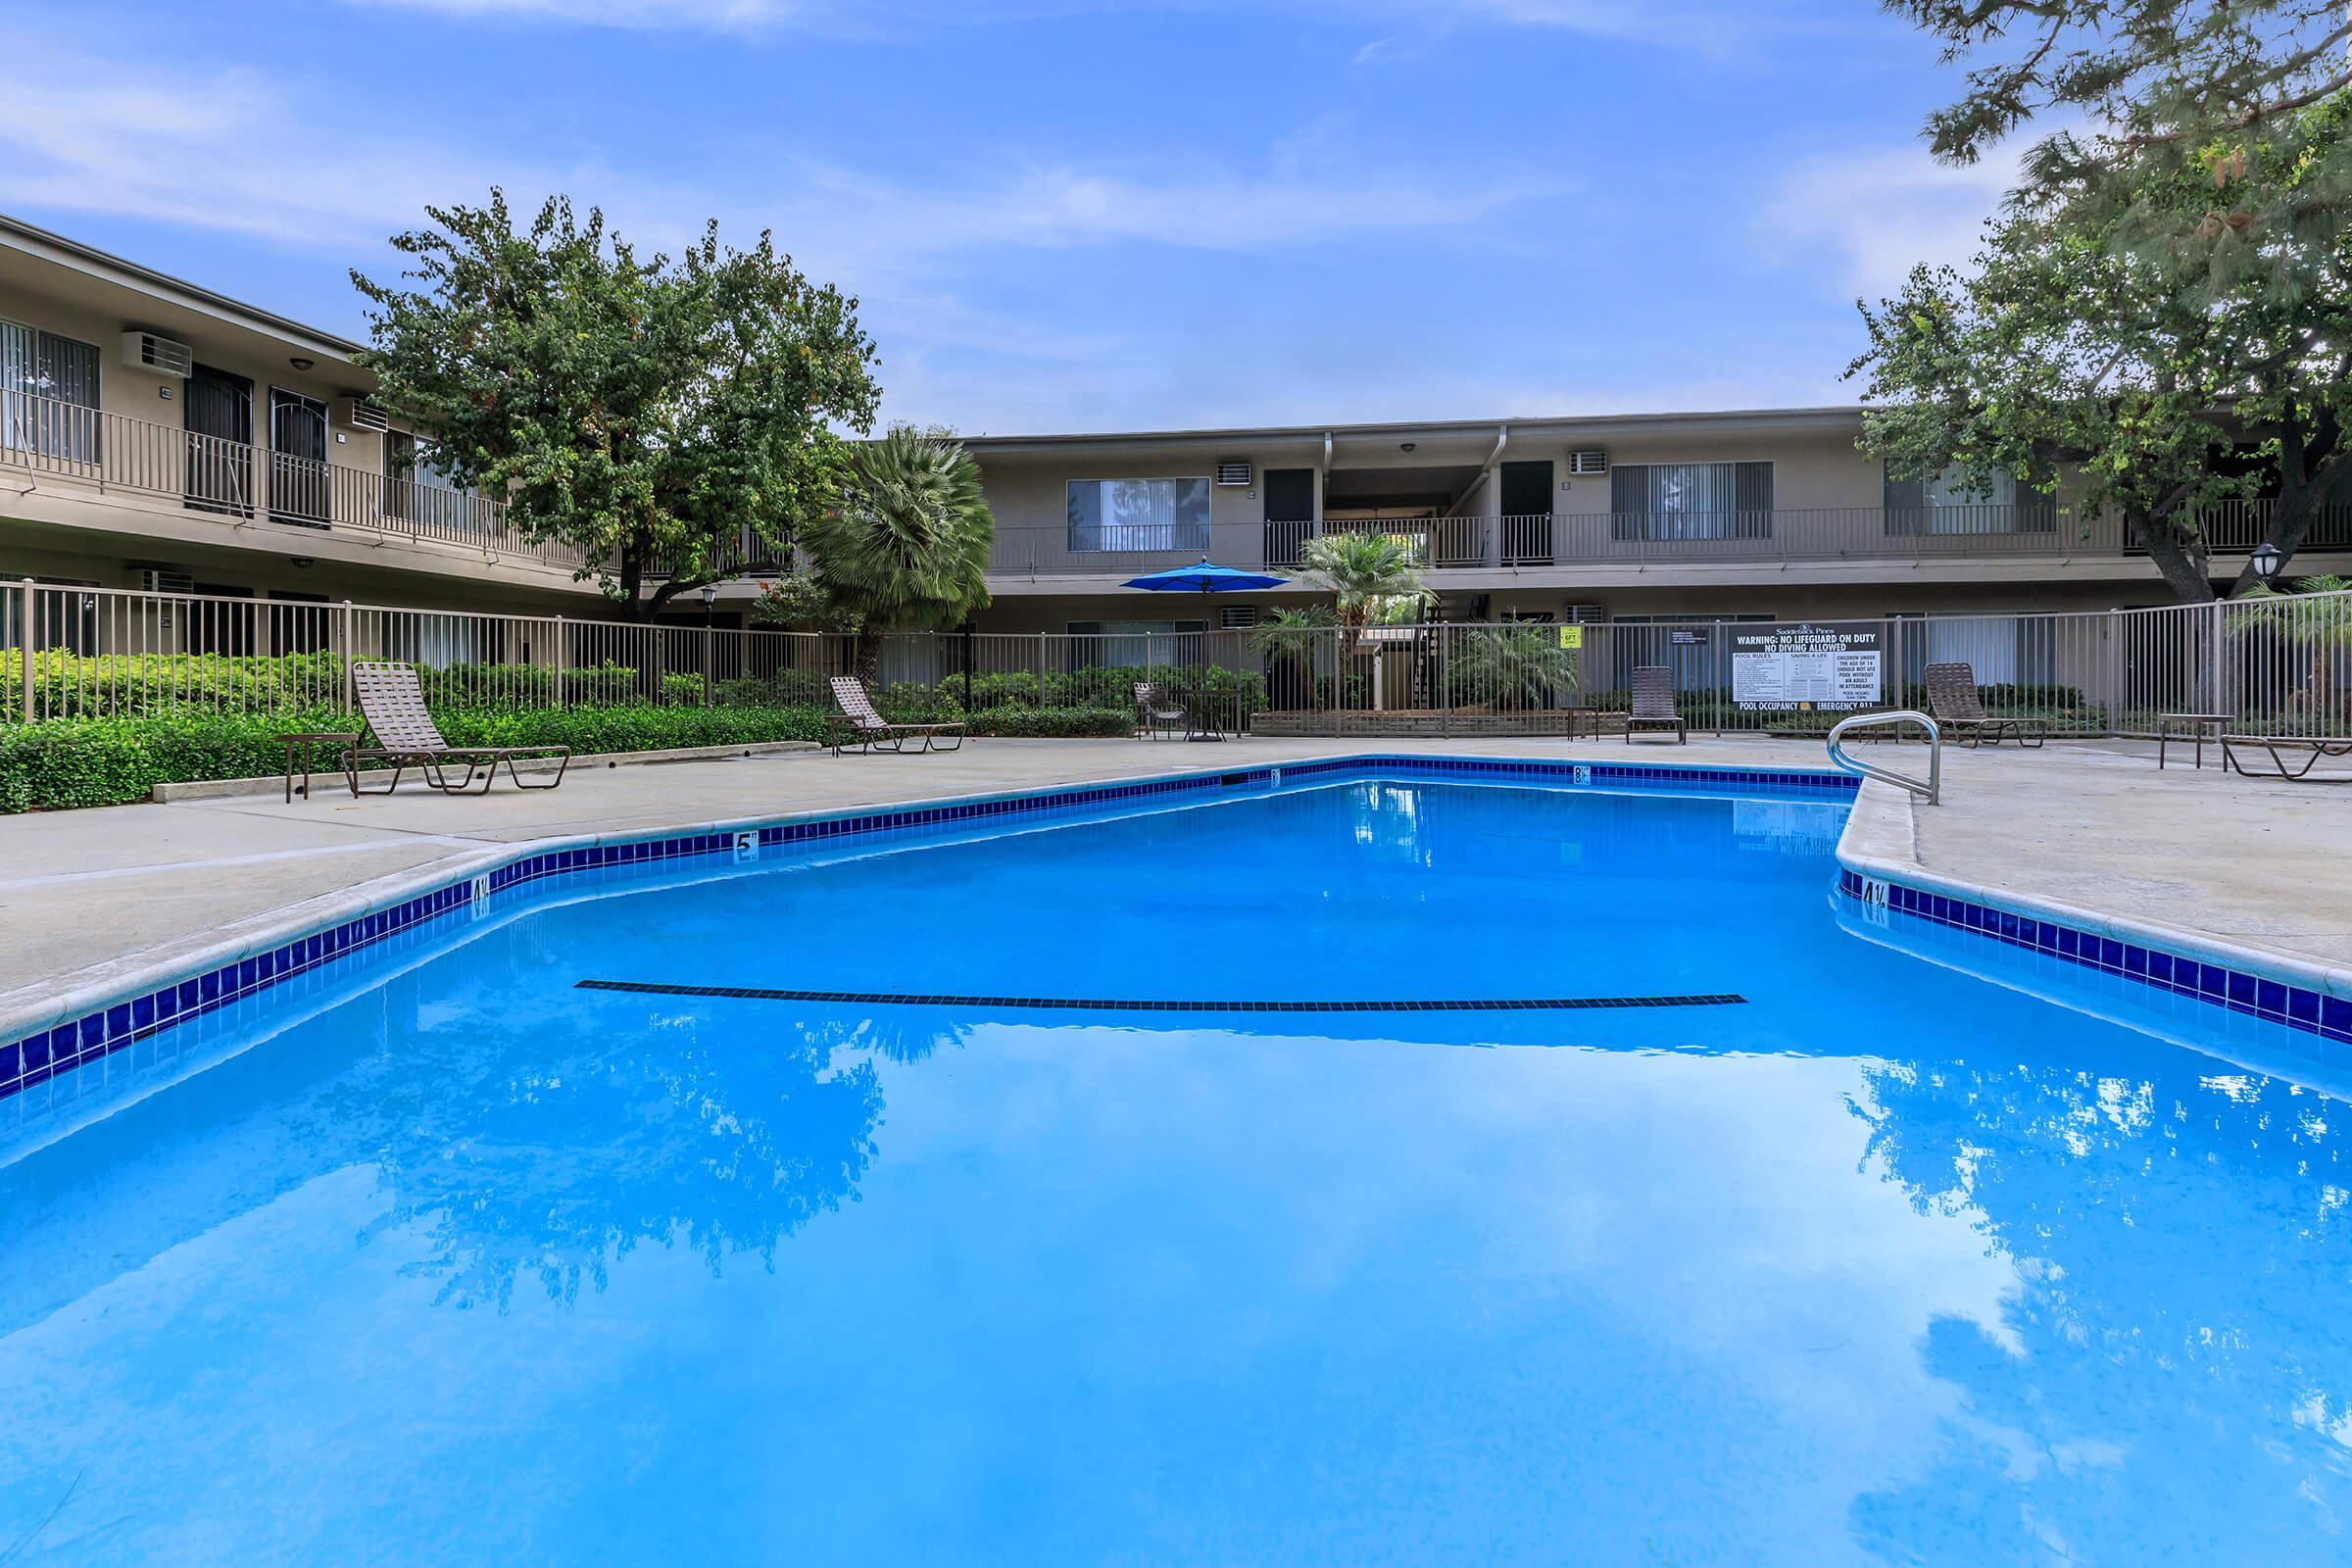 Saddleback Pines Apartment Homes community pool